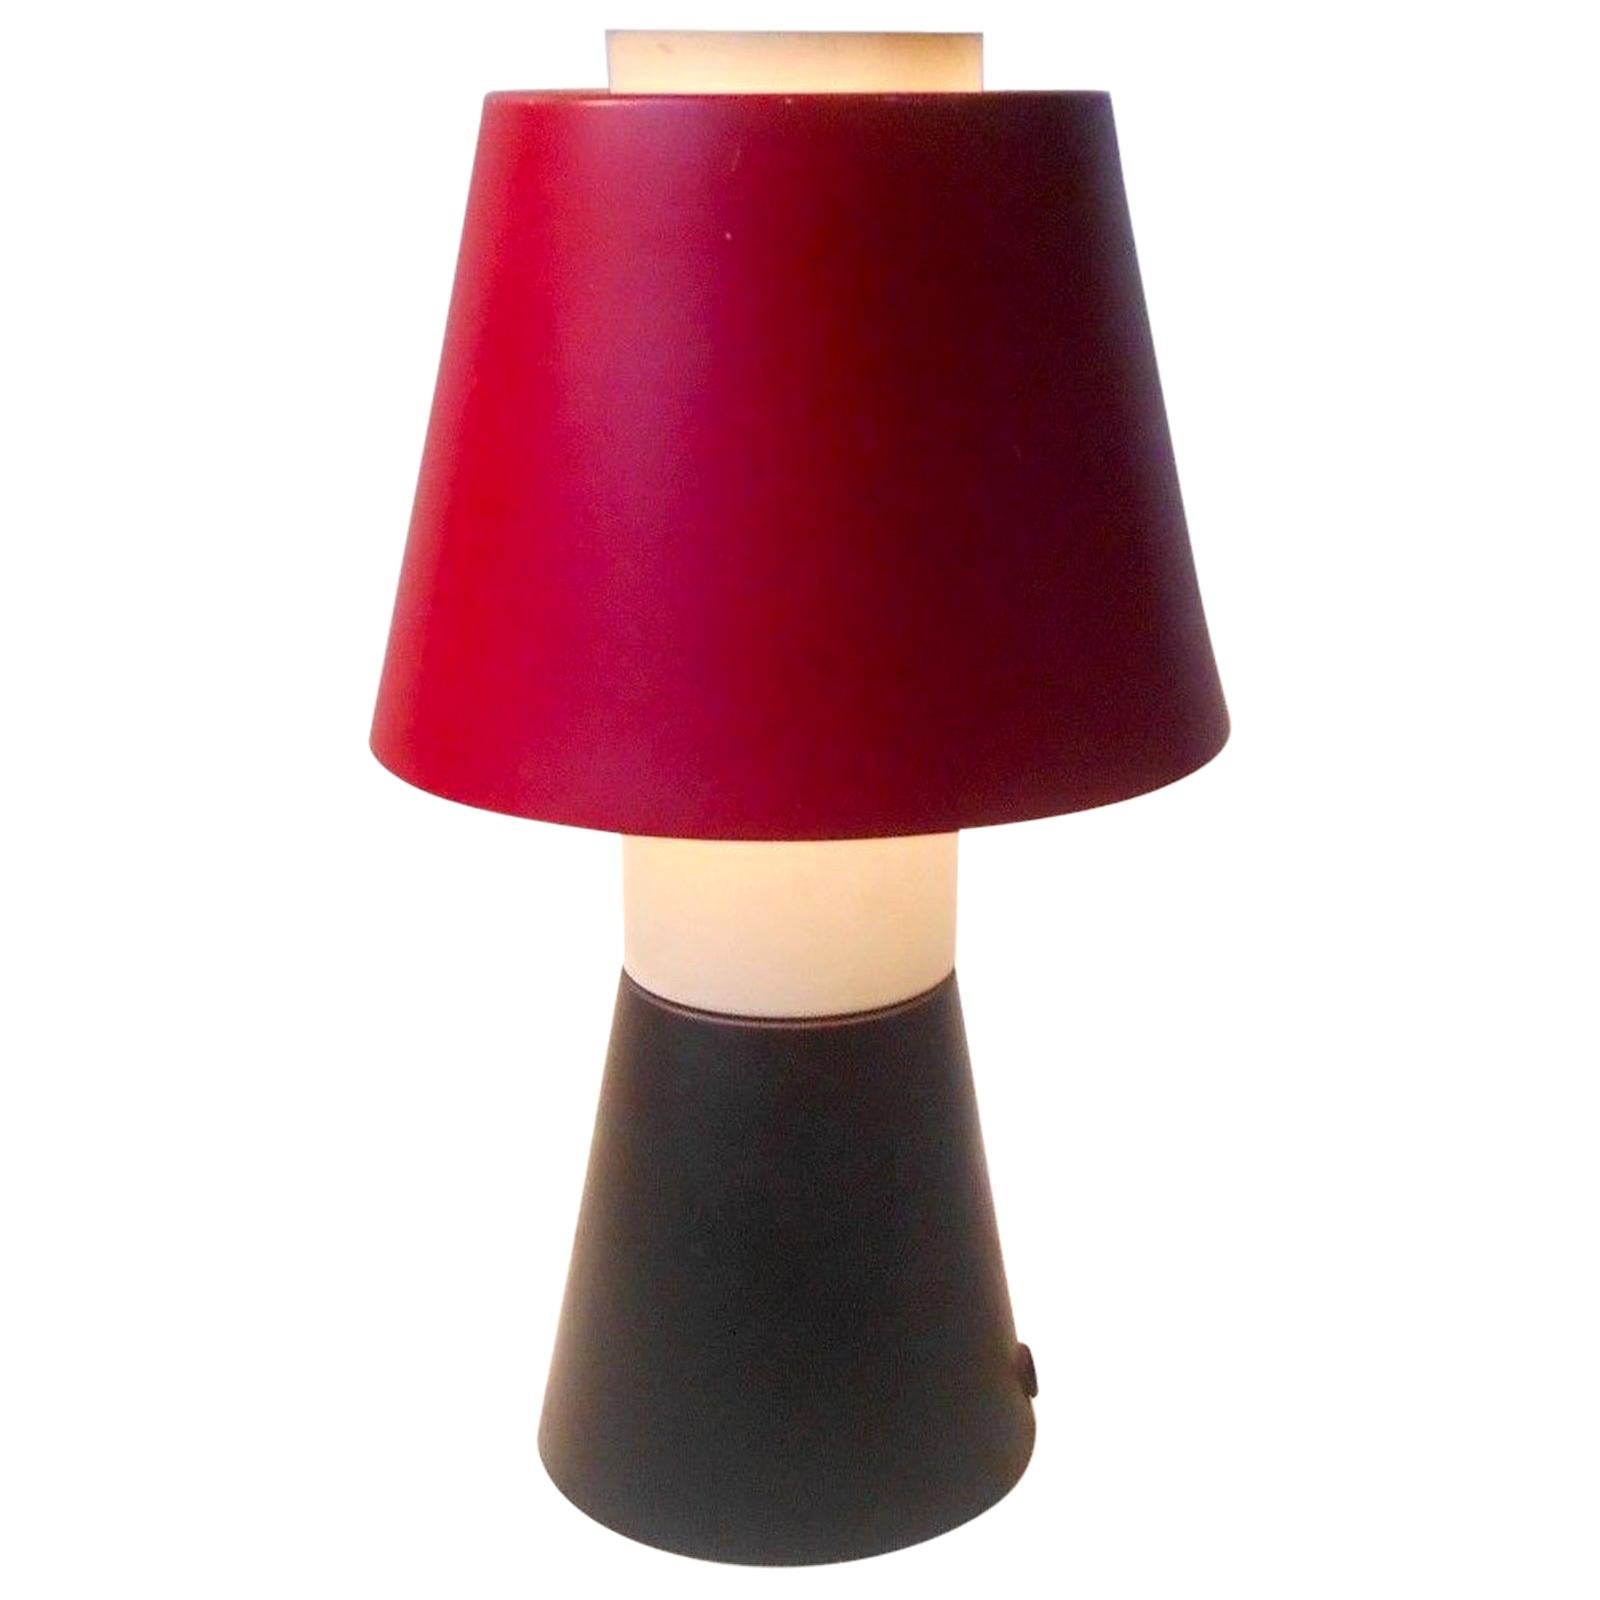 Rare Tri-color Modernist Table Lamp by Ernest Voss, Denmark, 1950s